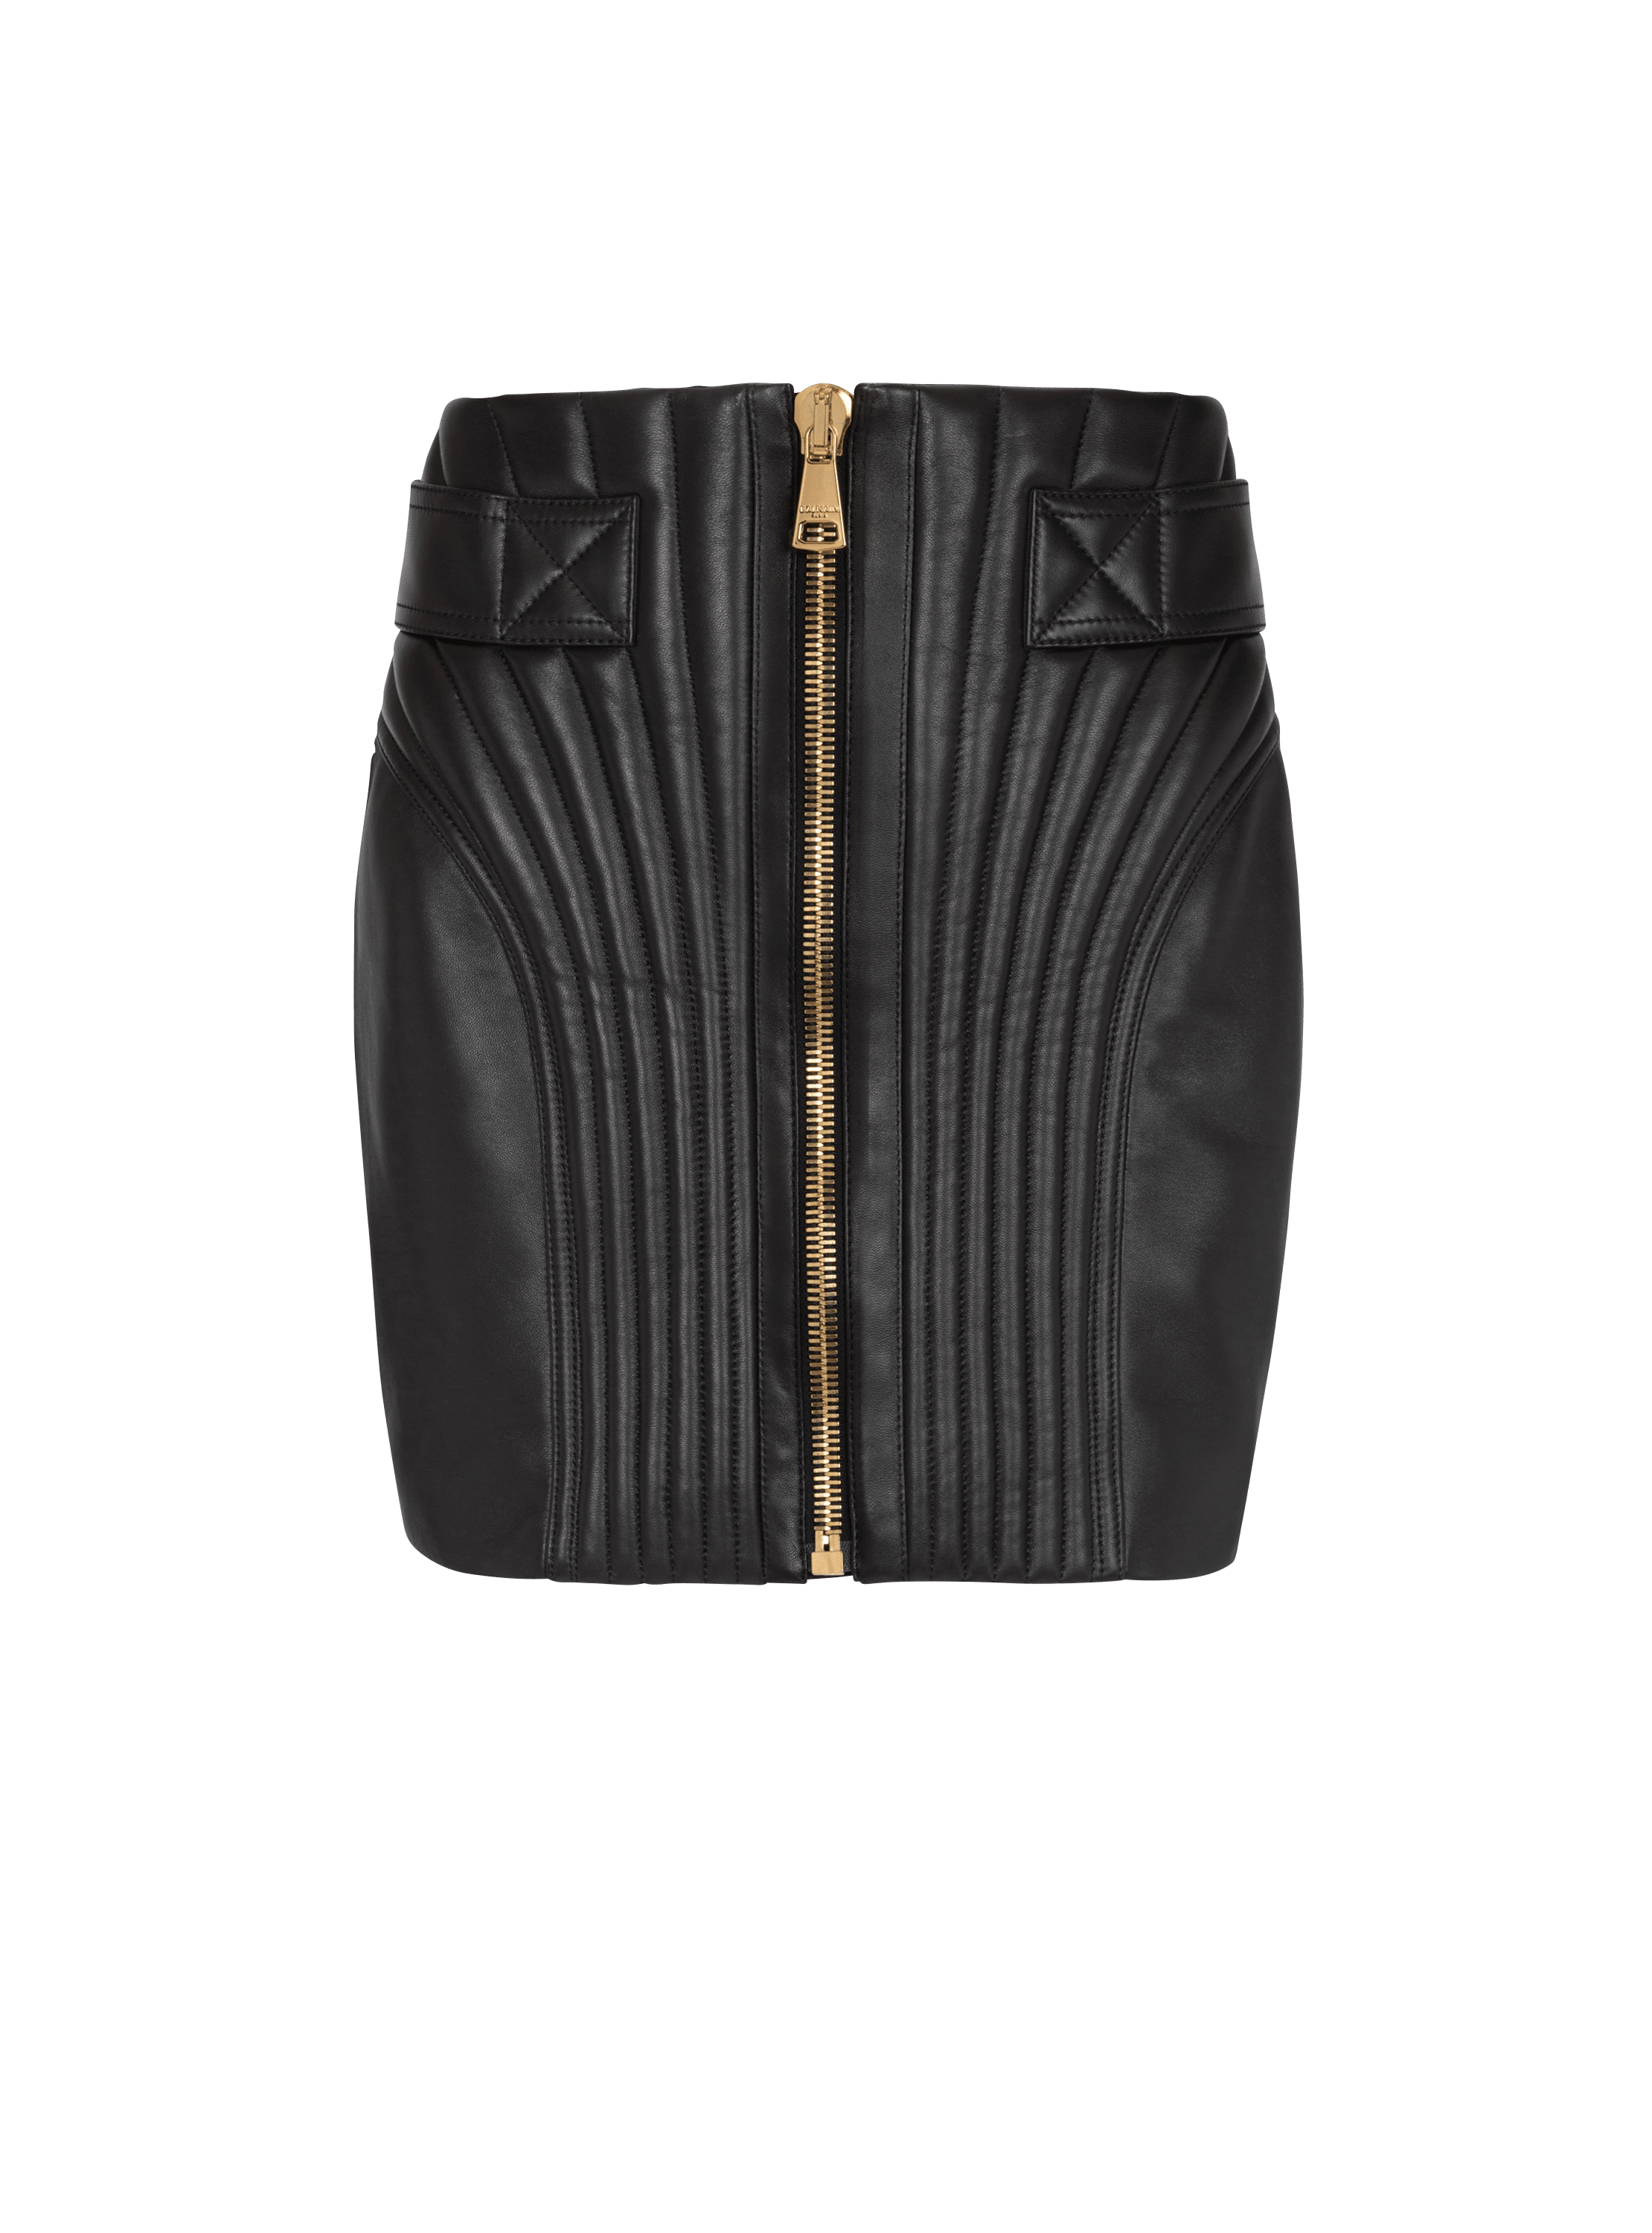 Short quilted leather skirt, black, hi-res